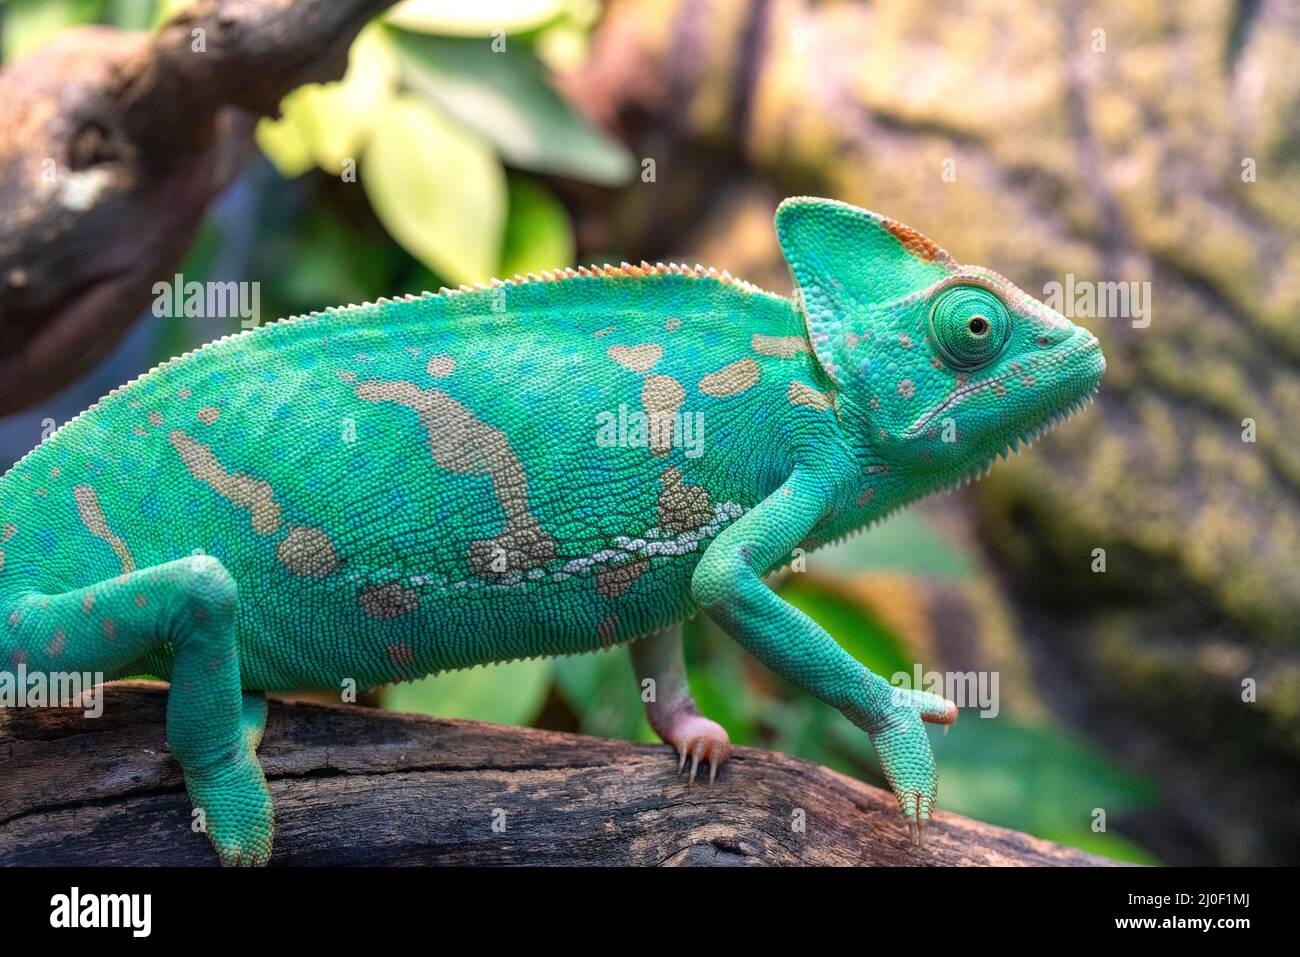 Young green chameleon. Natural habitat. Cute pet. Fauna of nature. Stock Photo